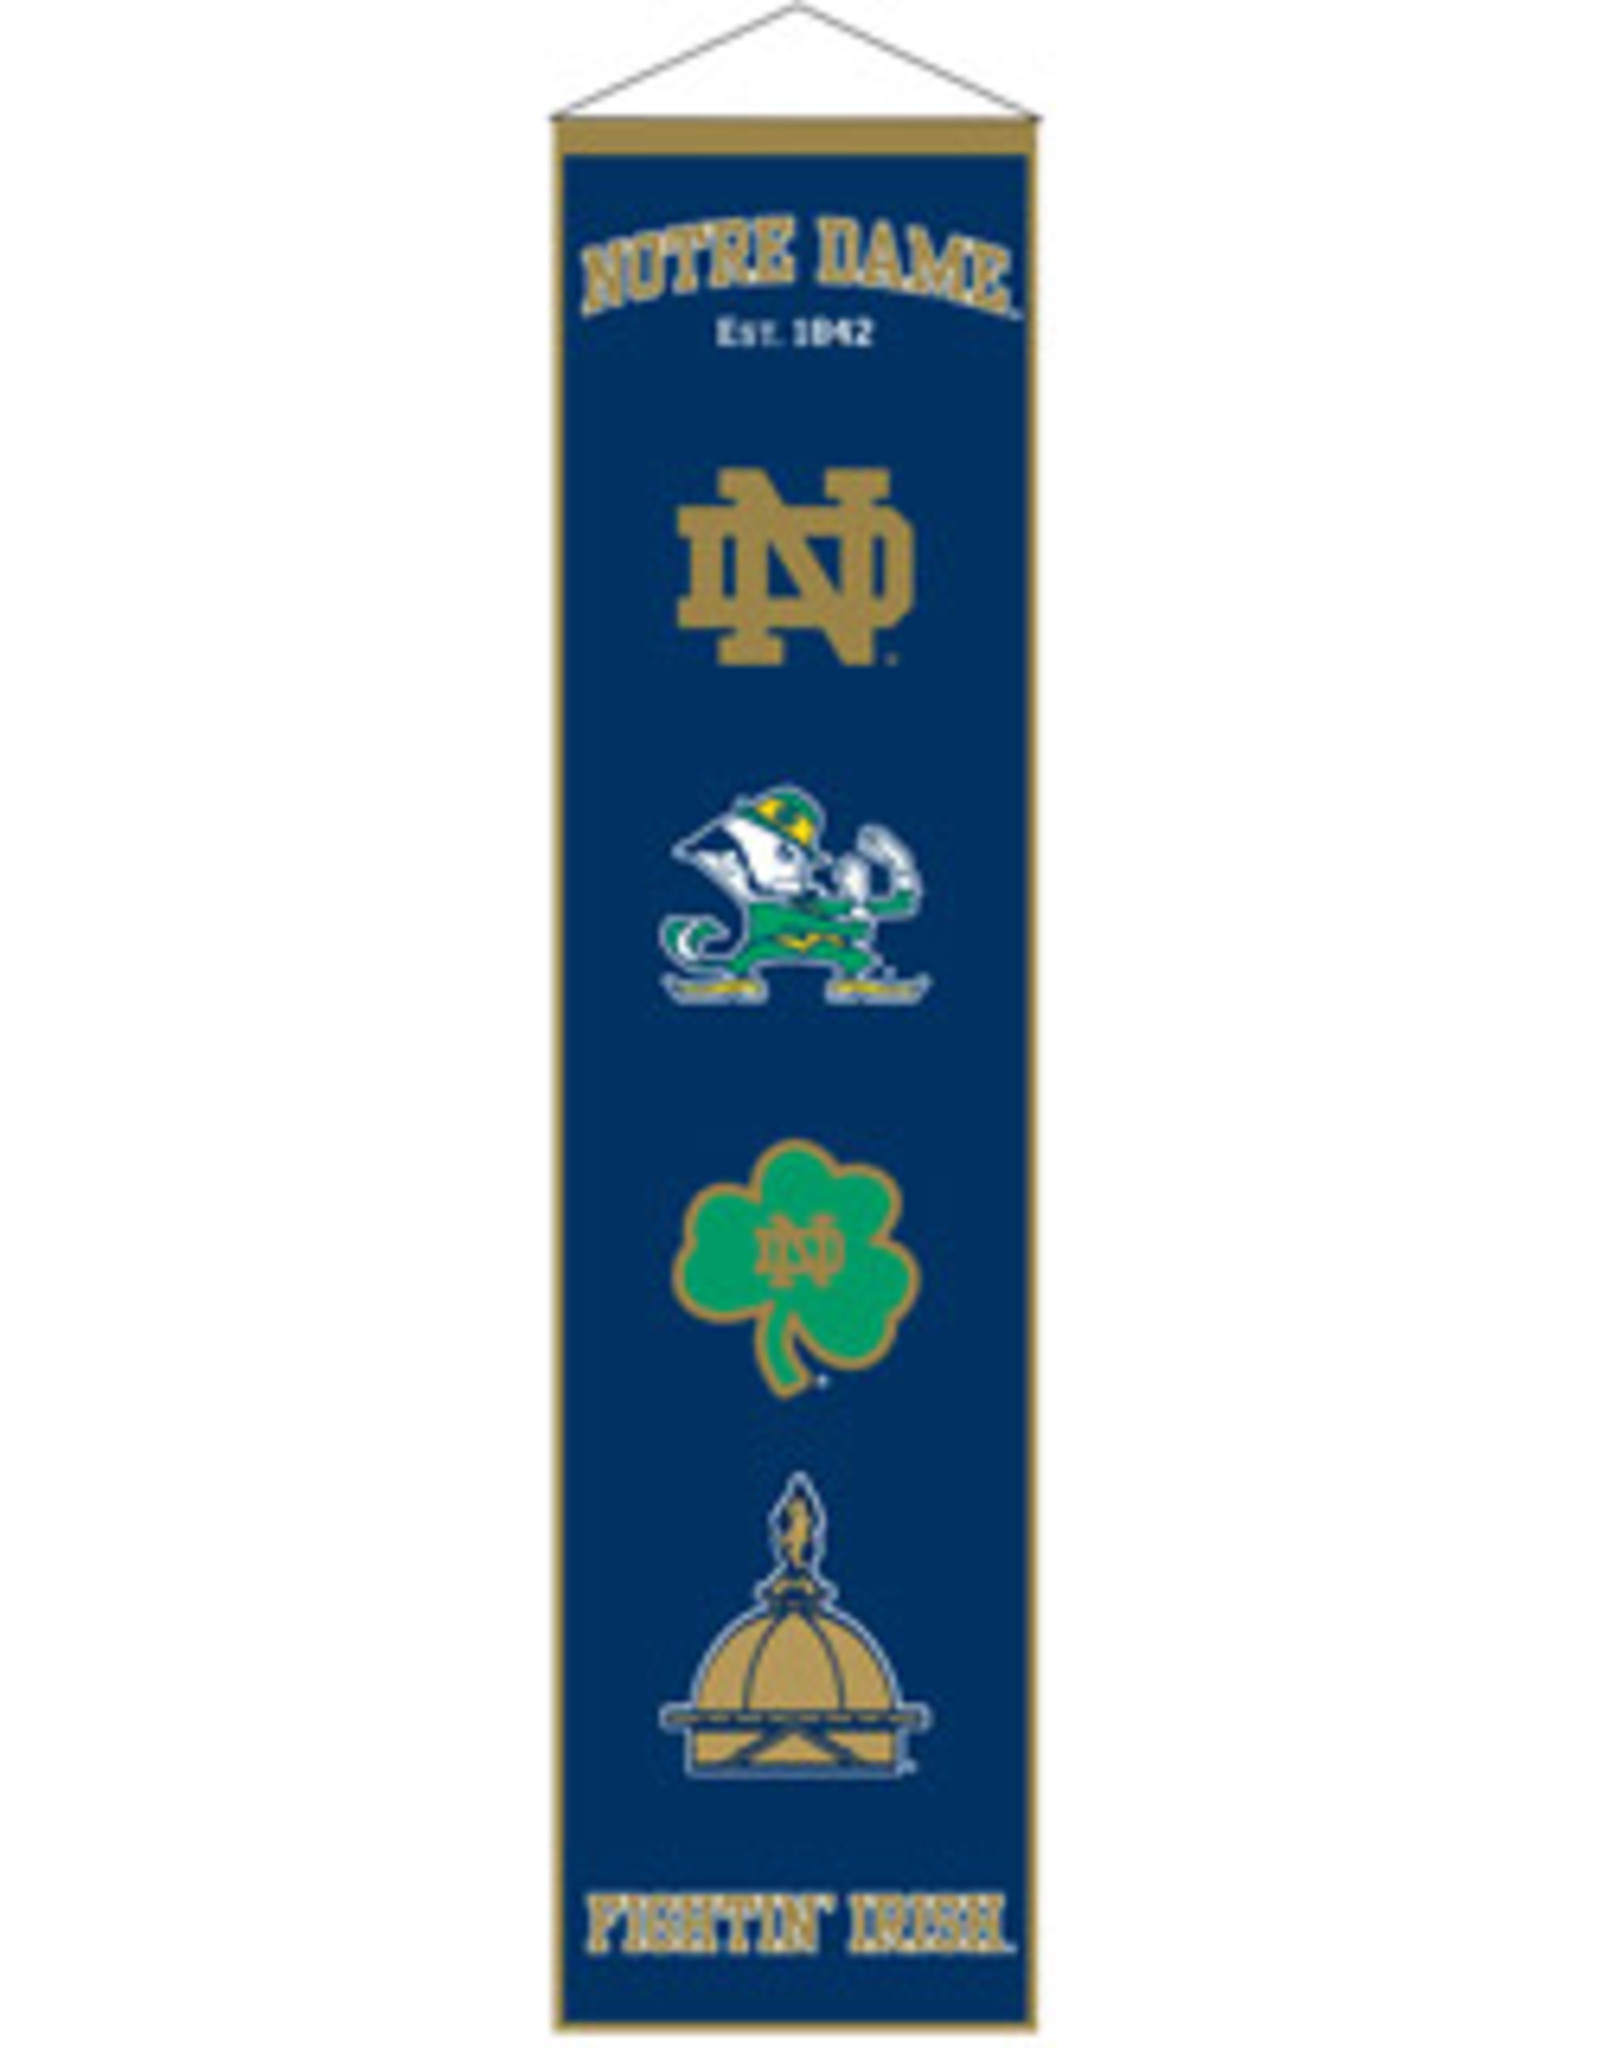 WINNING STREAK SPORTS Notre Dame Fighting Irish 8x32 Wool Heritage Banner